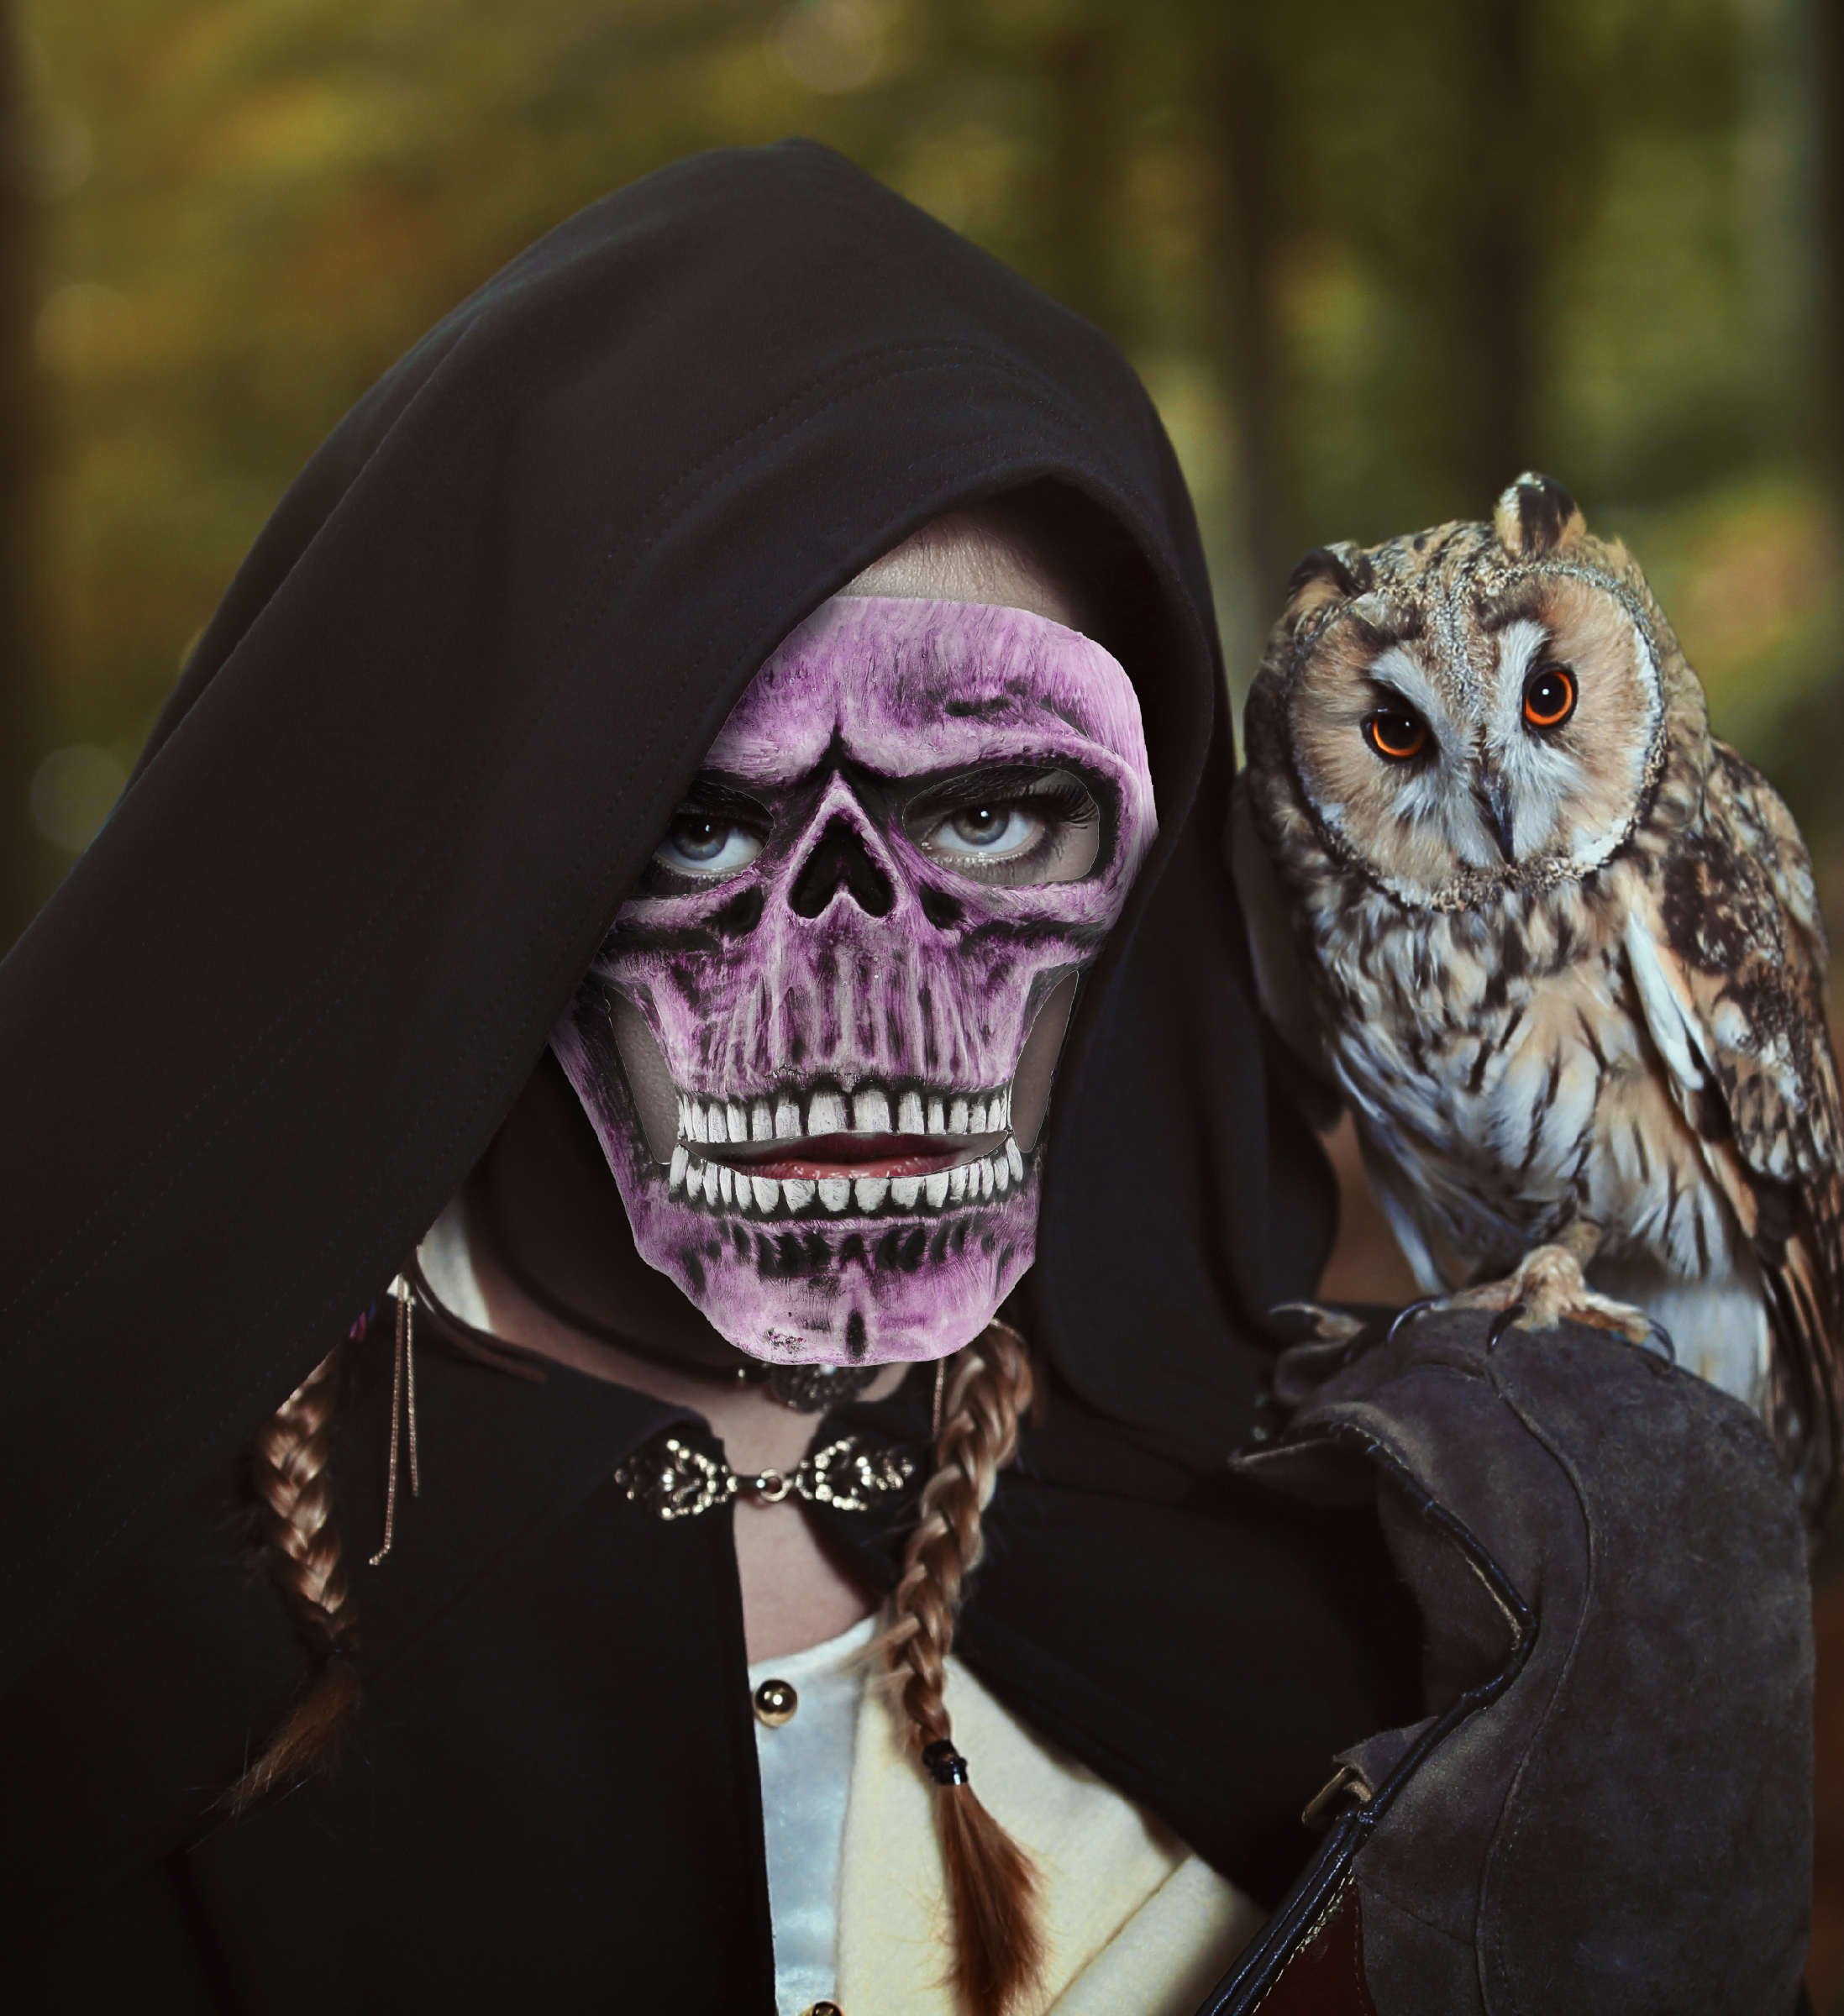 Attitude Studio Skeleton Mask Costume Skull Steampunk Full Face Costume Accessory for Halloween, Parties & Horror Event